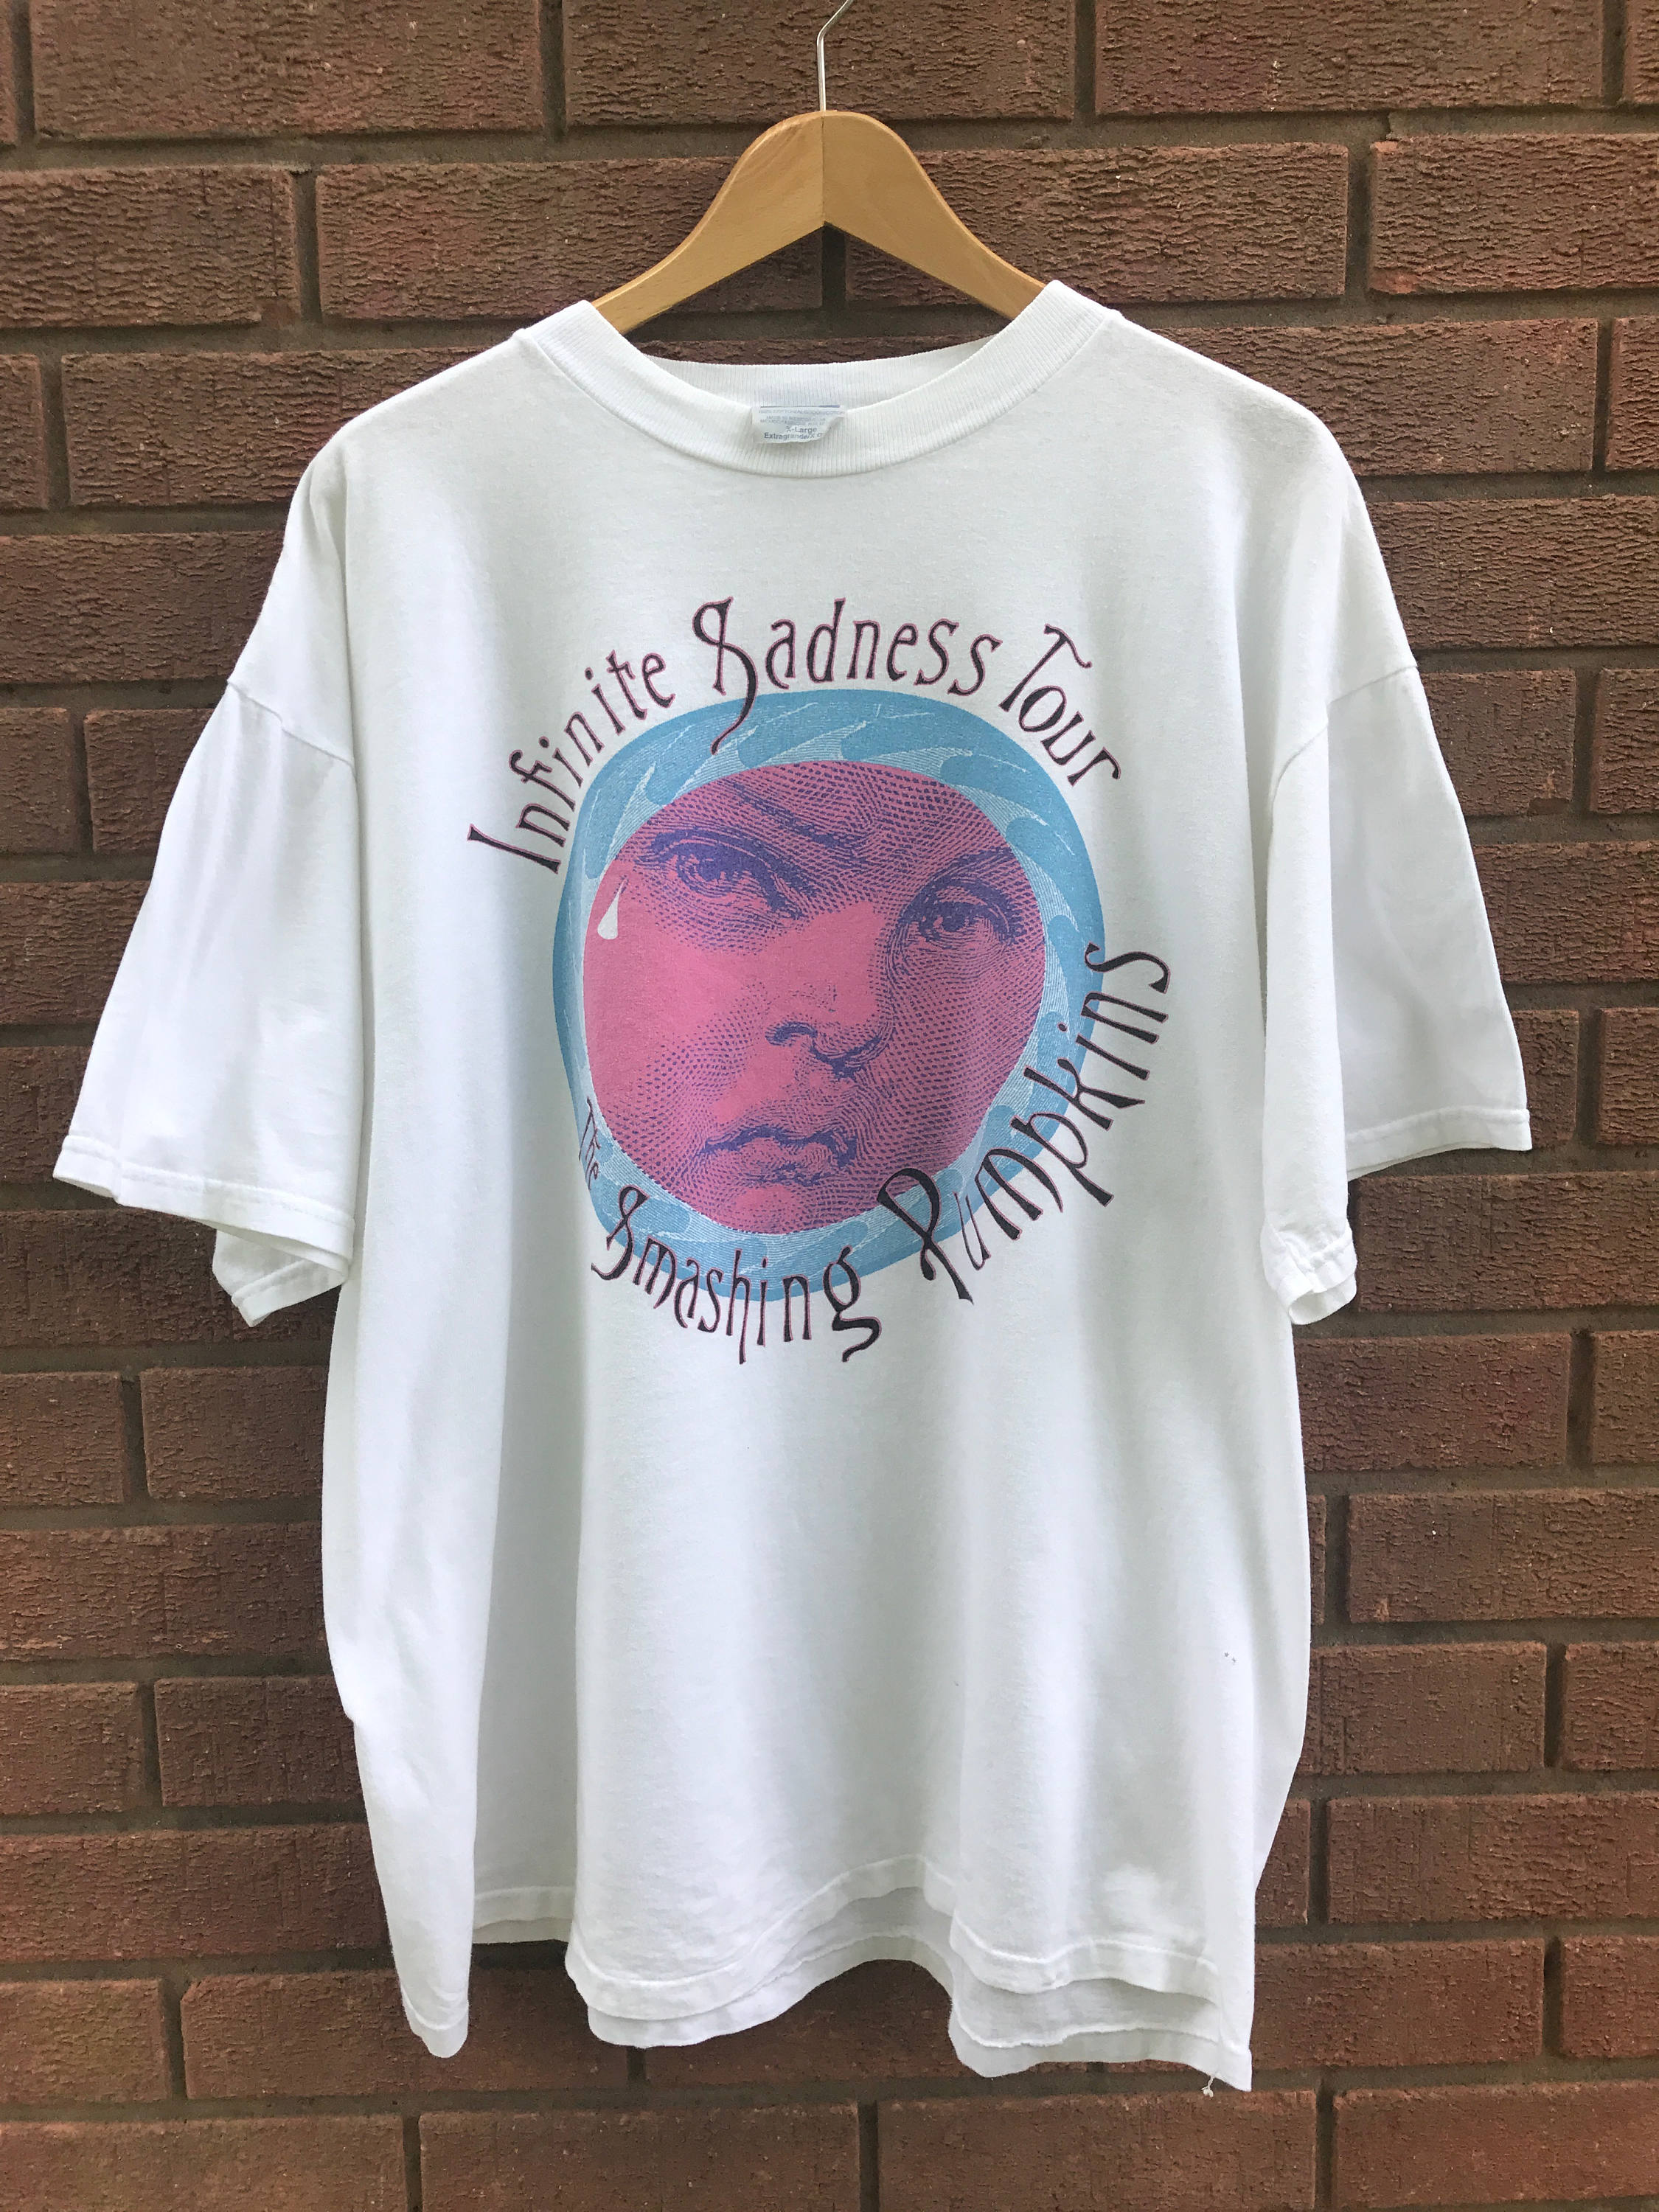 THE SMASHING PUMPKINS Infinite Sadness tour 1996/97 shirt